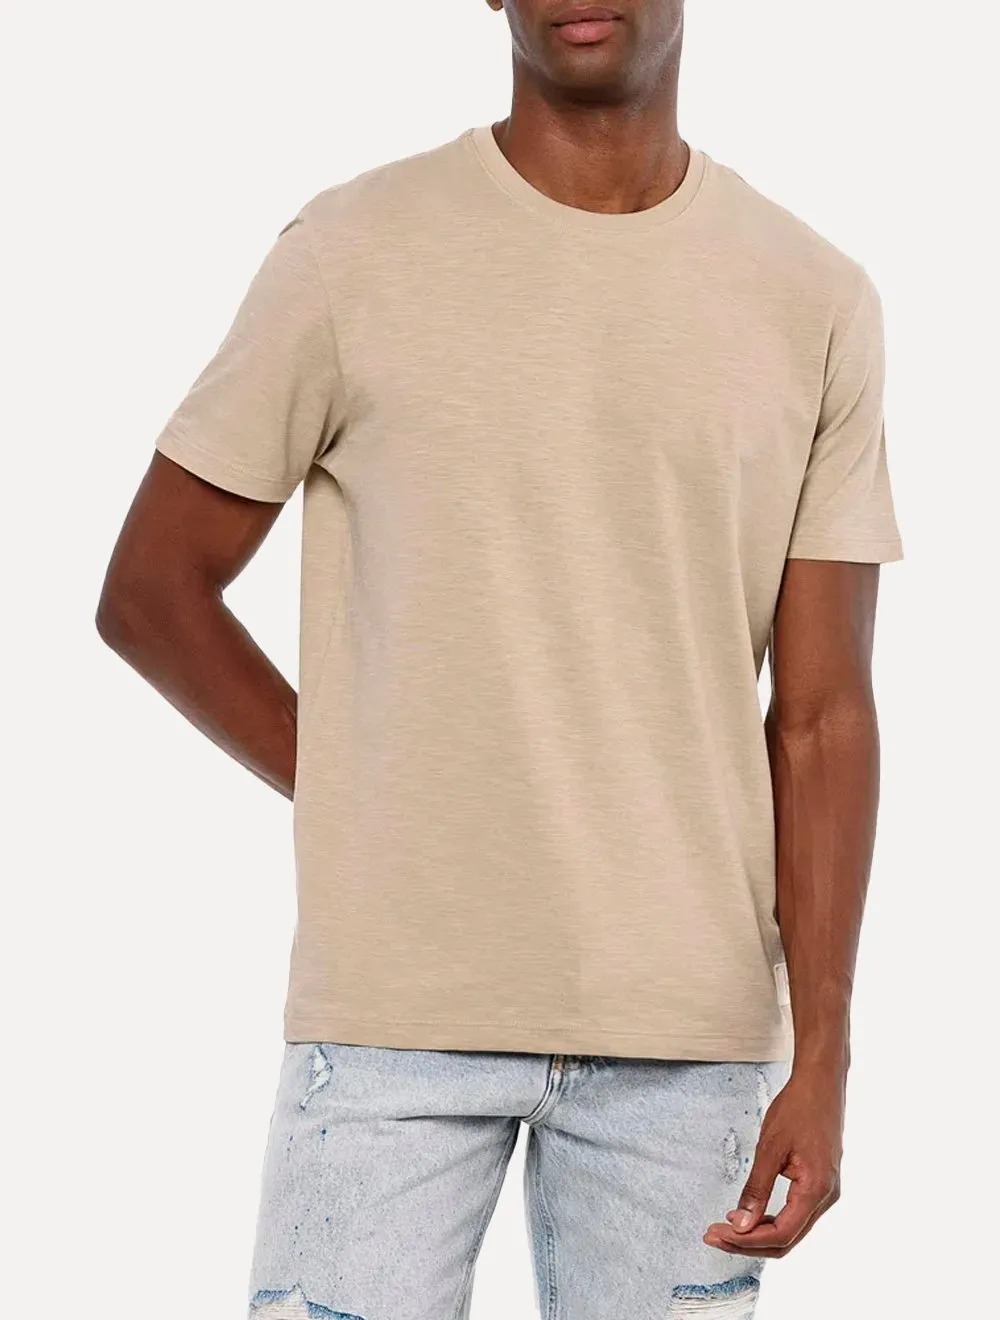 Camiseta Calvin Klein Jeans Masculina CK Khakis Stone Cáqui Claro Mescla